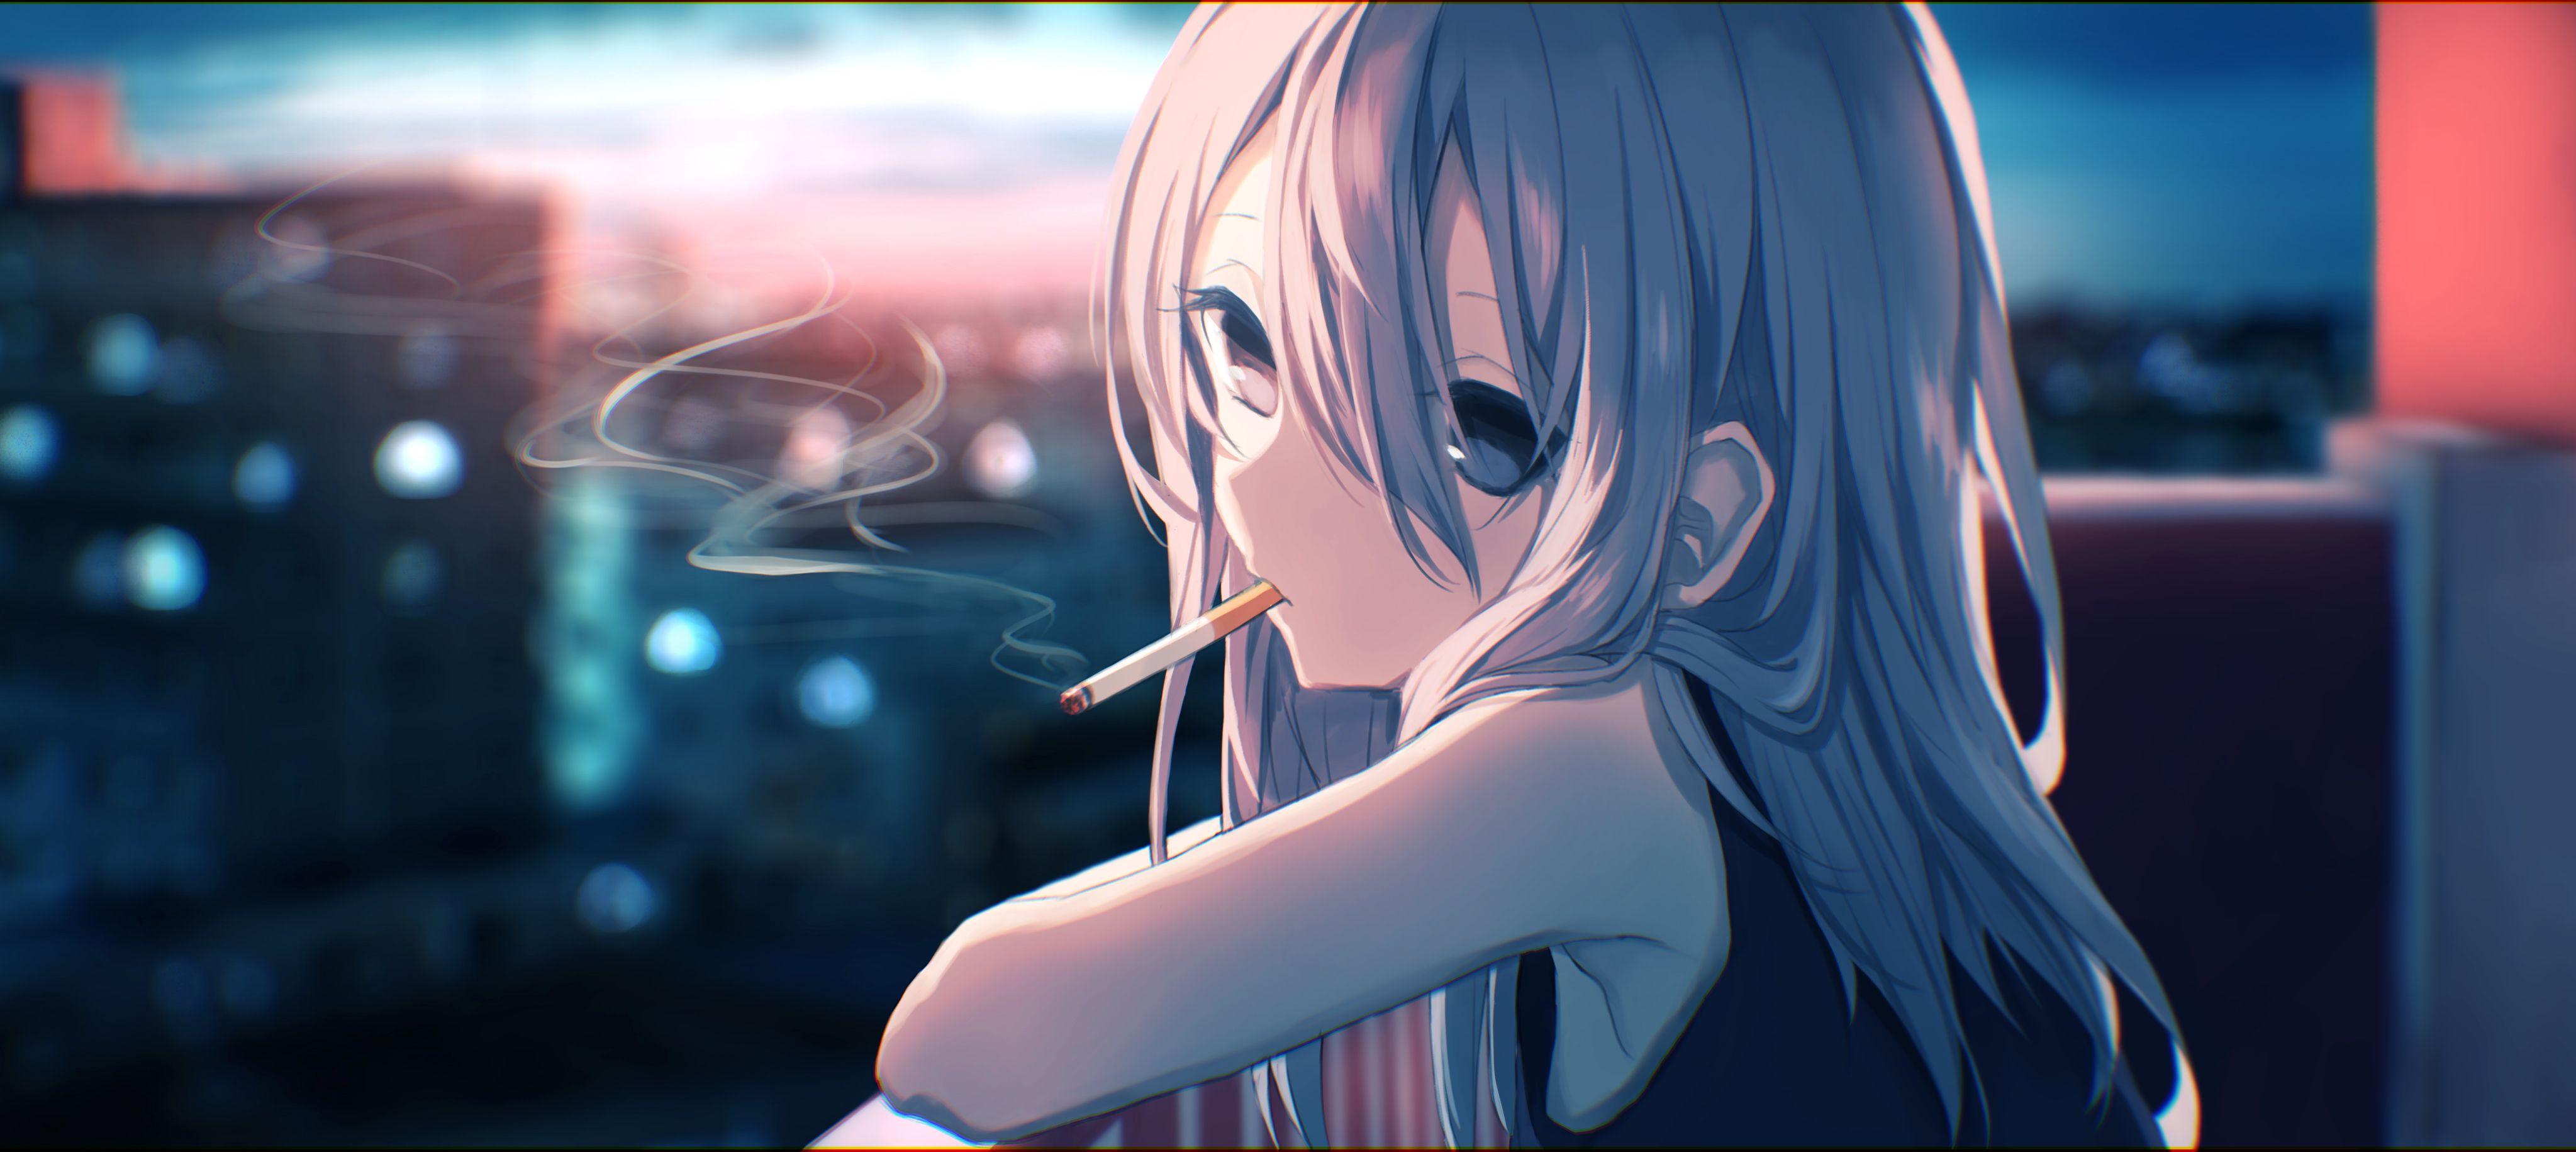 Smoking Anime Wallpapers  Top Free Smoking Anime Backgrounds   WallpaperAccess